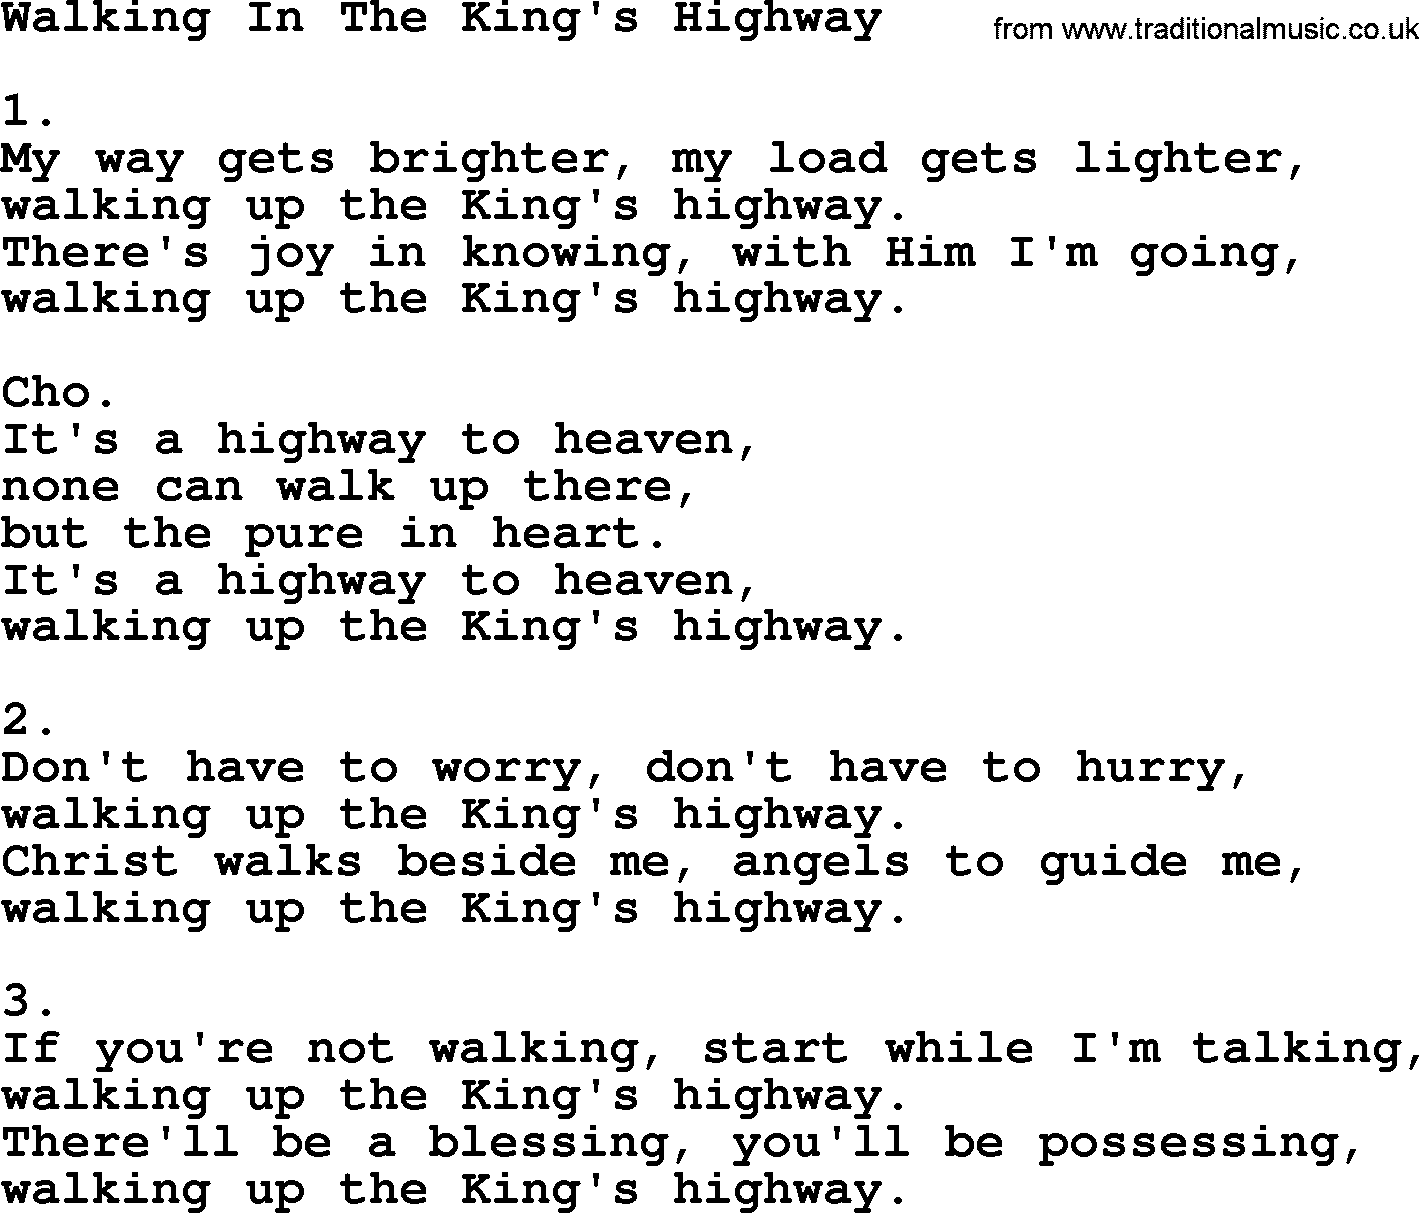 Apostolic & Pentecostal Hymns and Songs, Hymn: Walking In The King's Highway lyrics and PDF